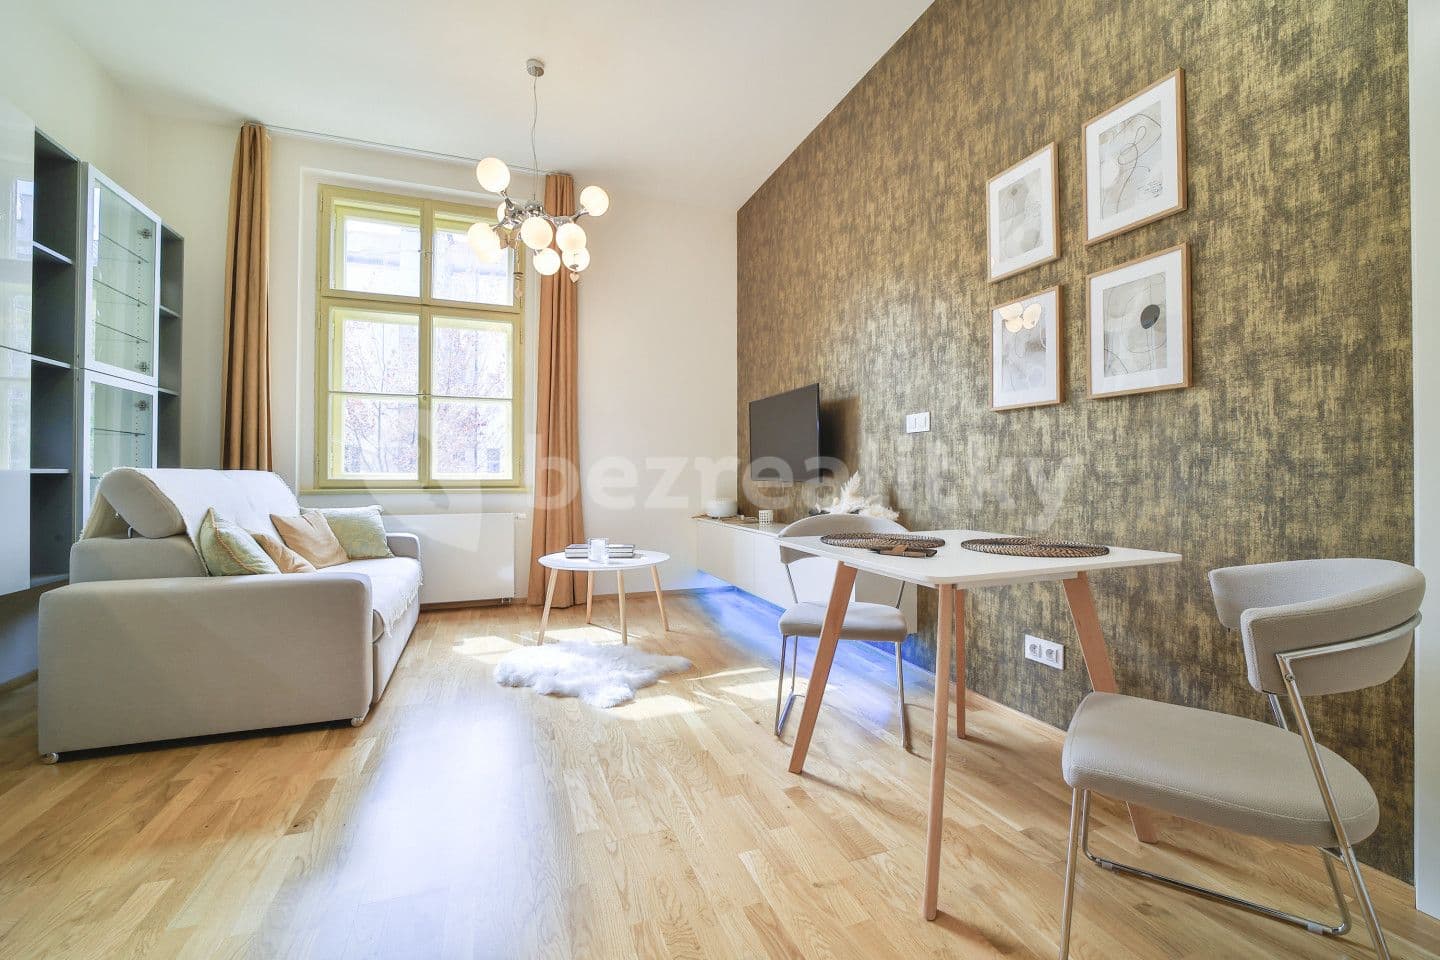 1 bedroom with open-plan kitchen flat for sale, 43 m², Legerova, Prague, Prague